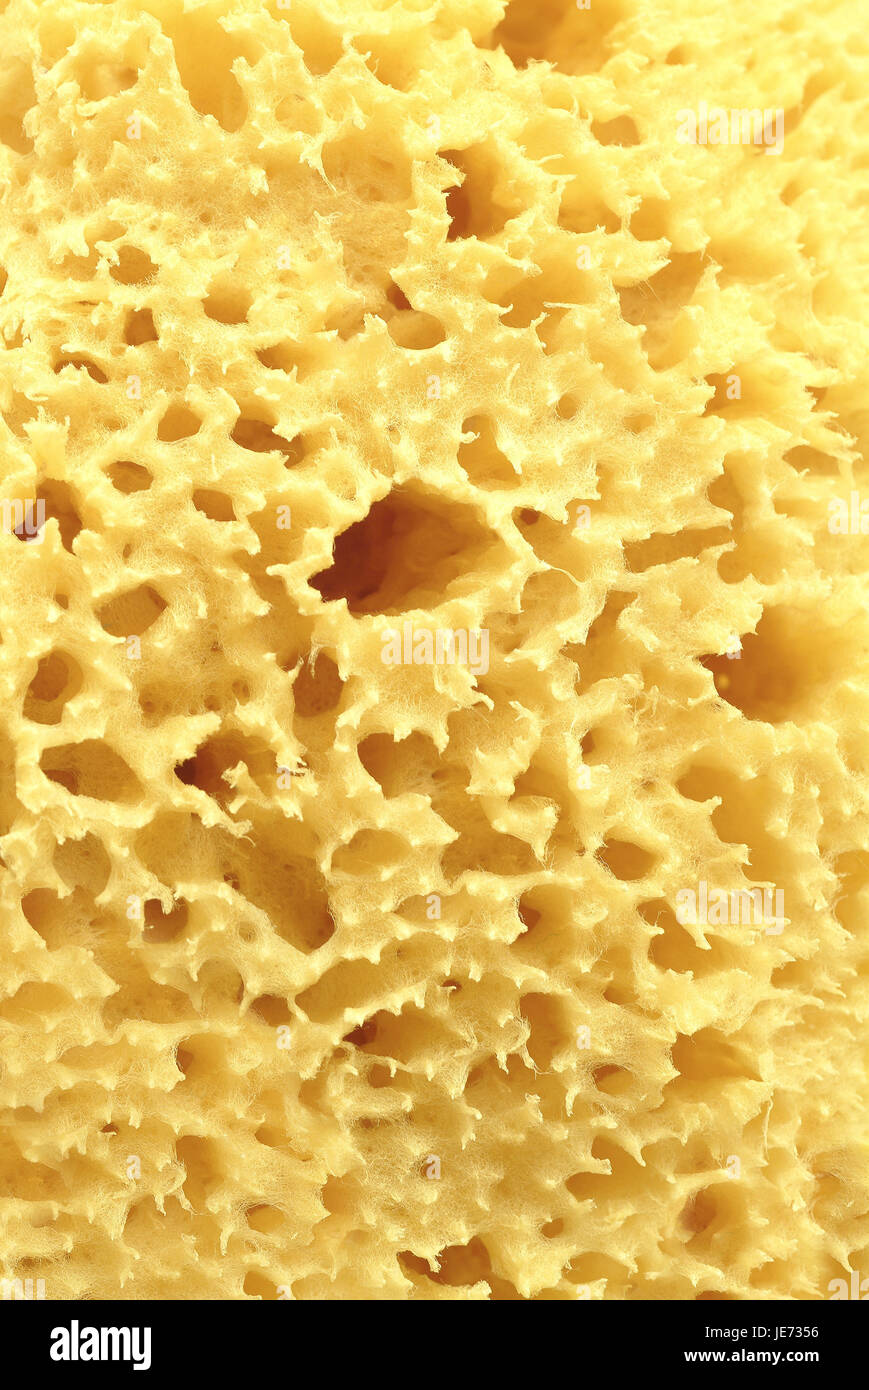 Nature fungus, close up, Stock Photo